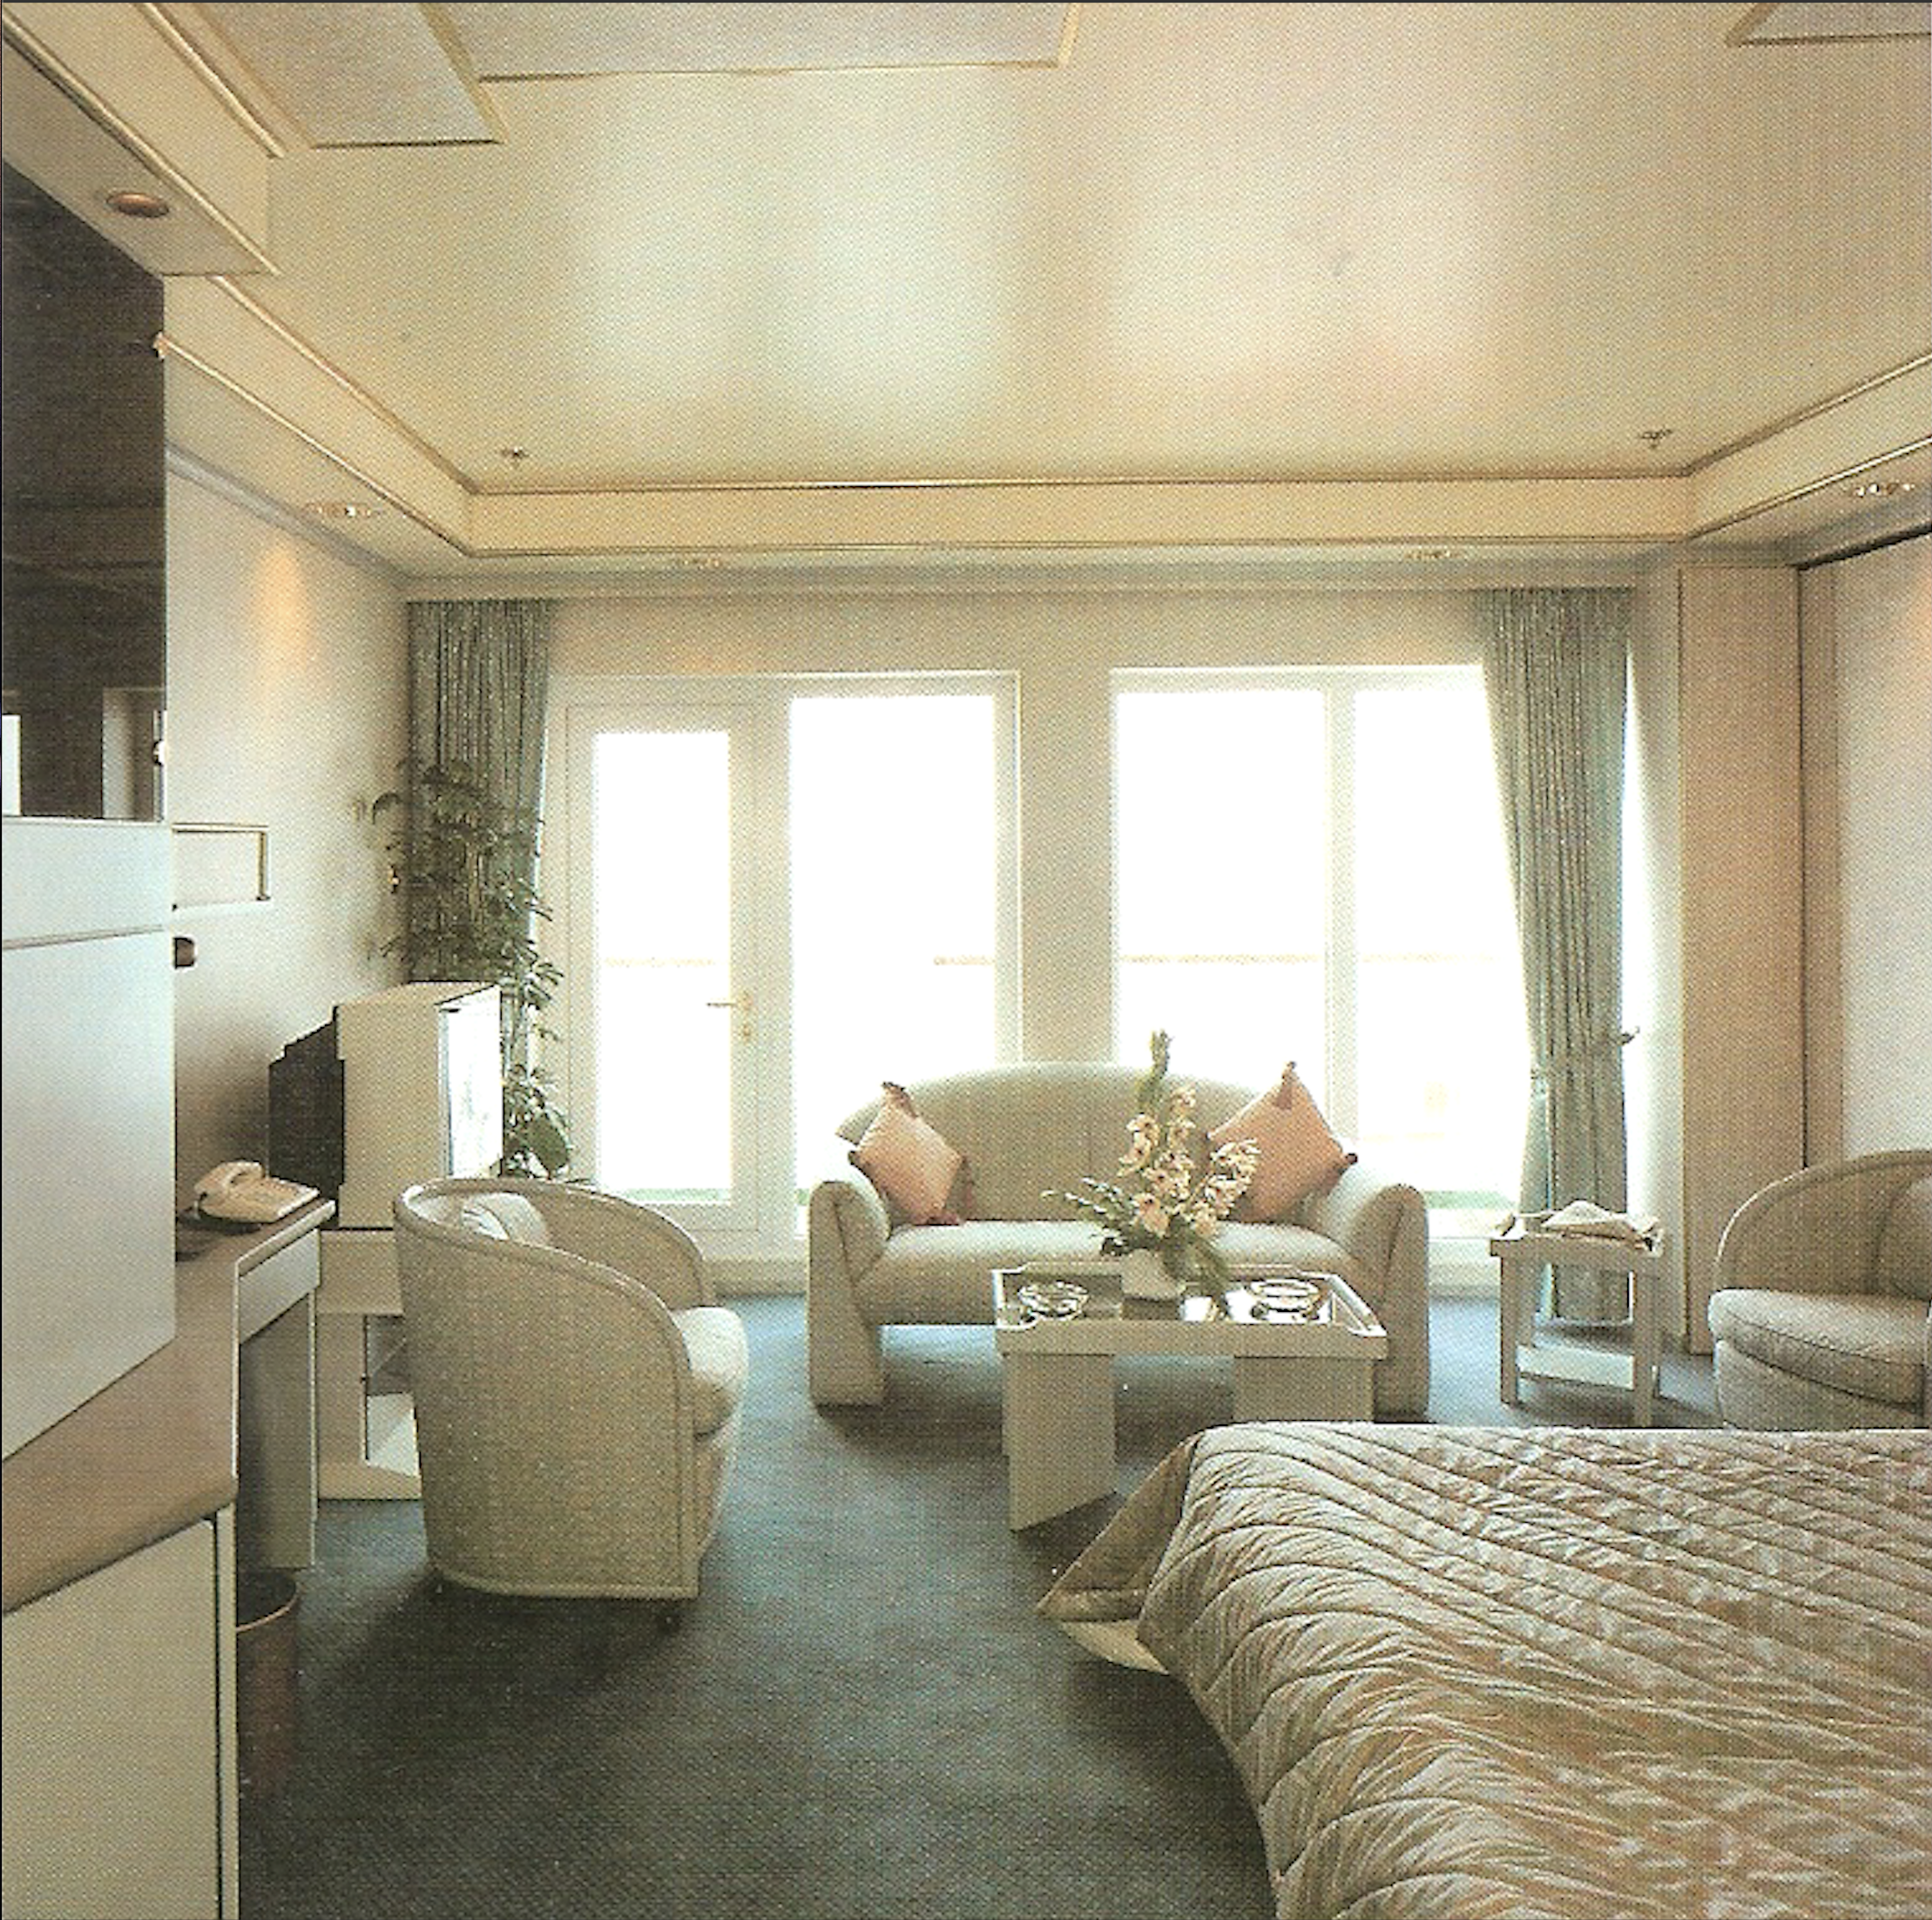  New luxury suites added to top deck on Queen Elizabeth II (Cunard Line) 